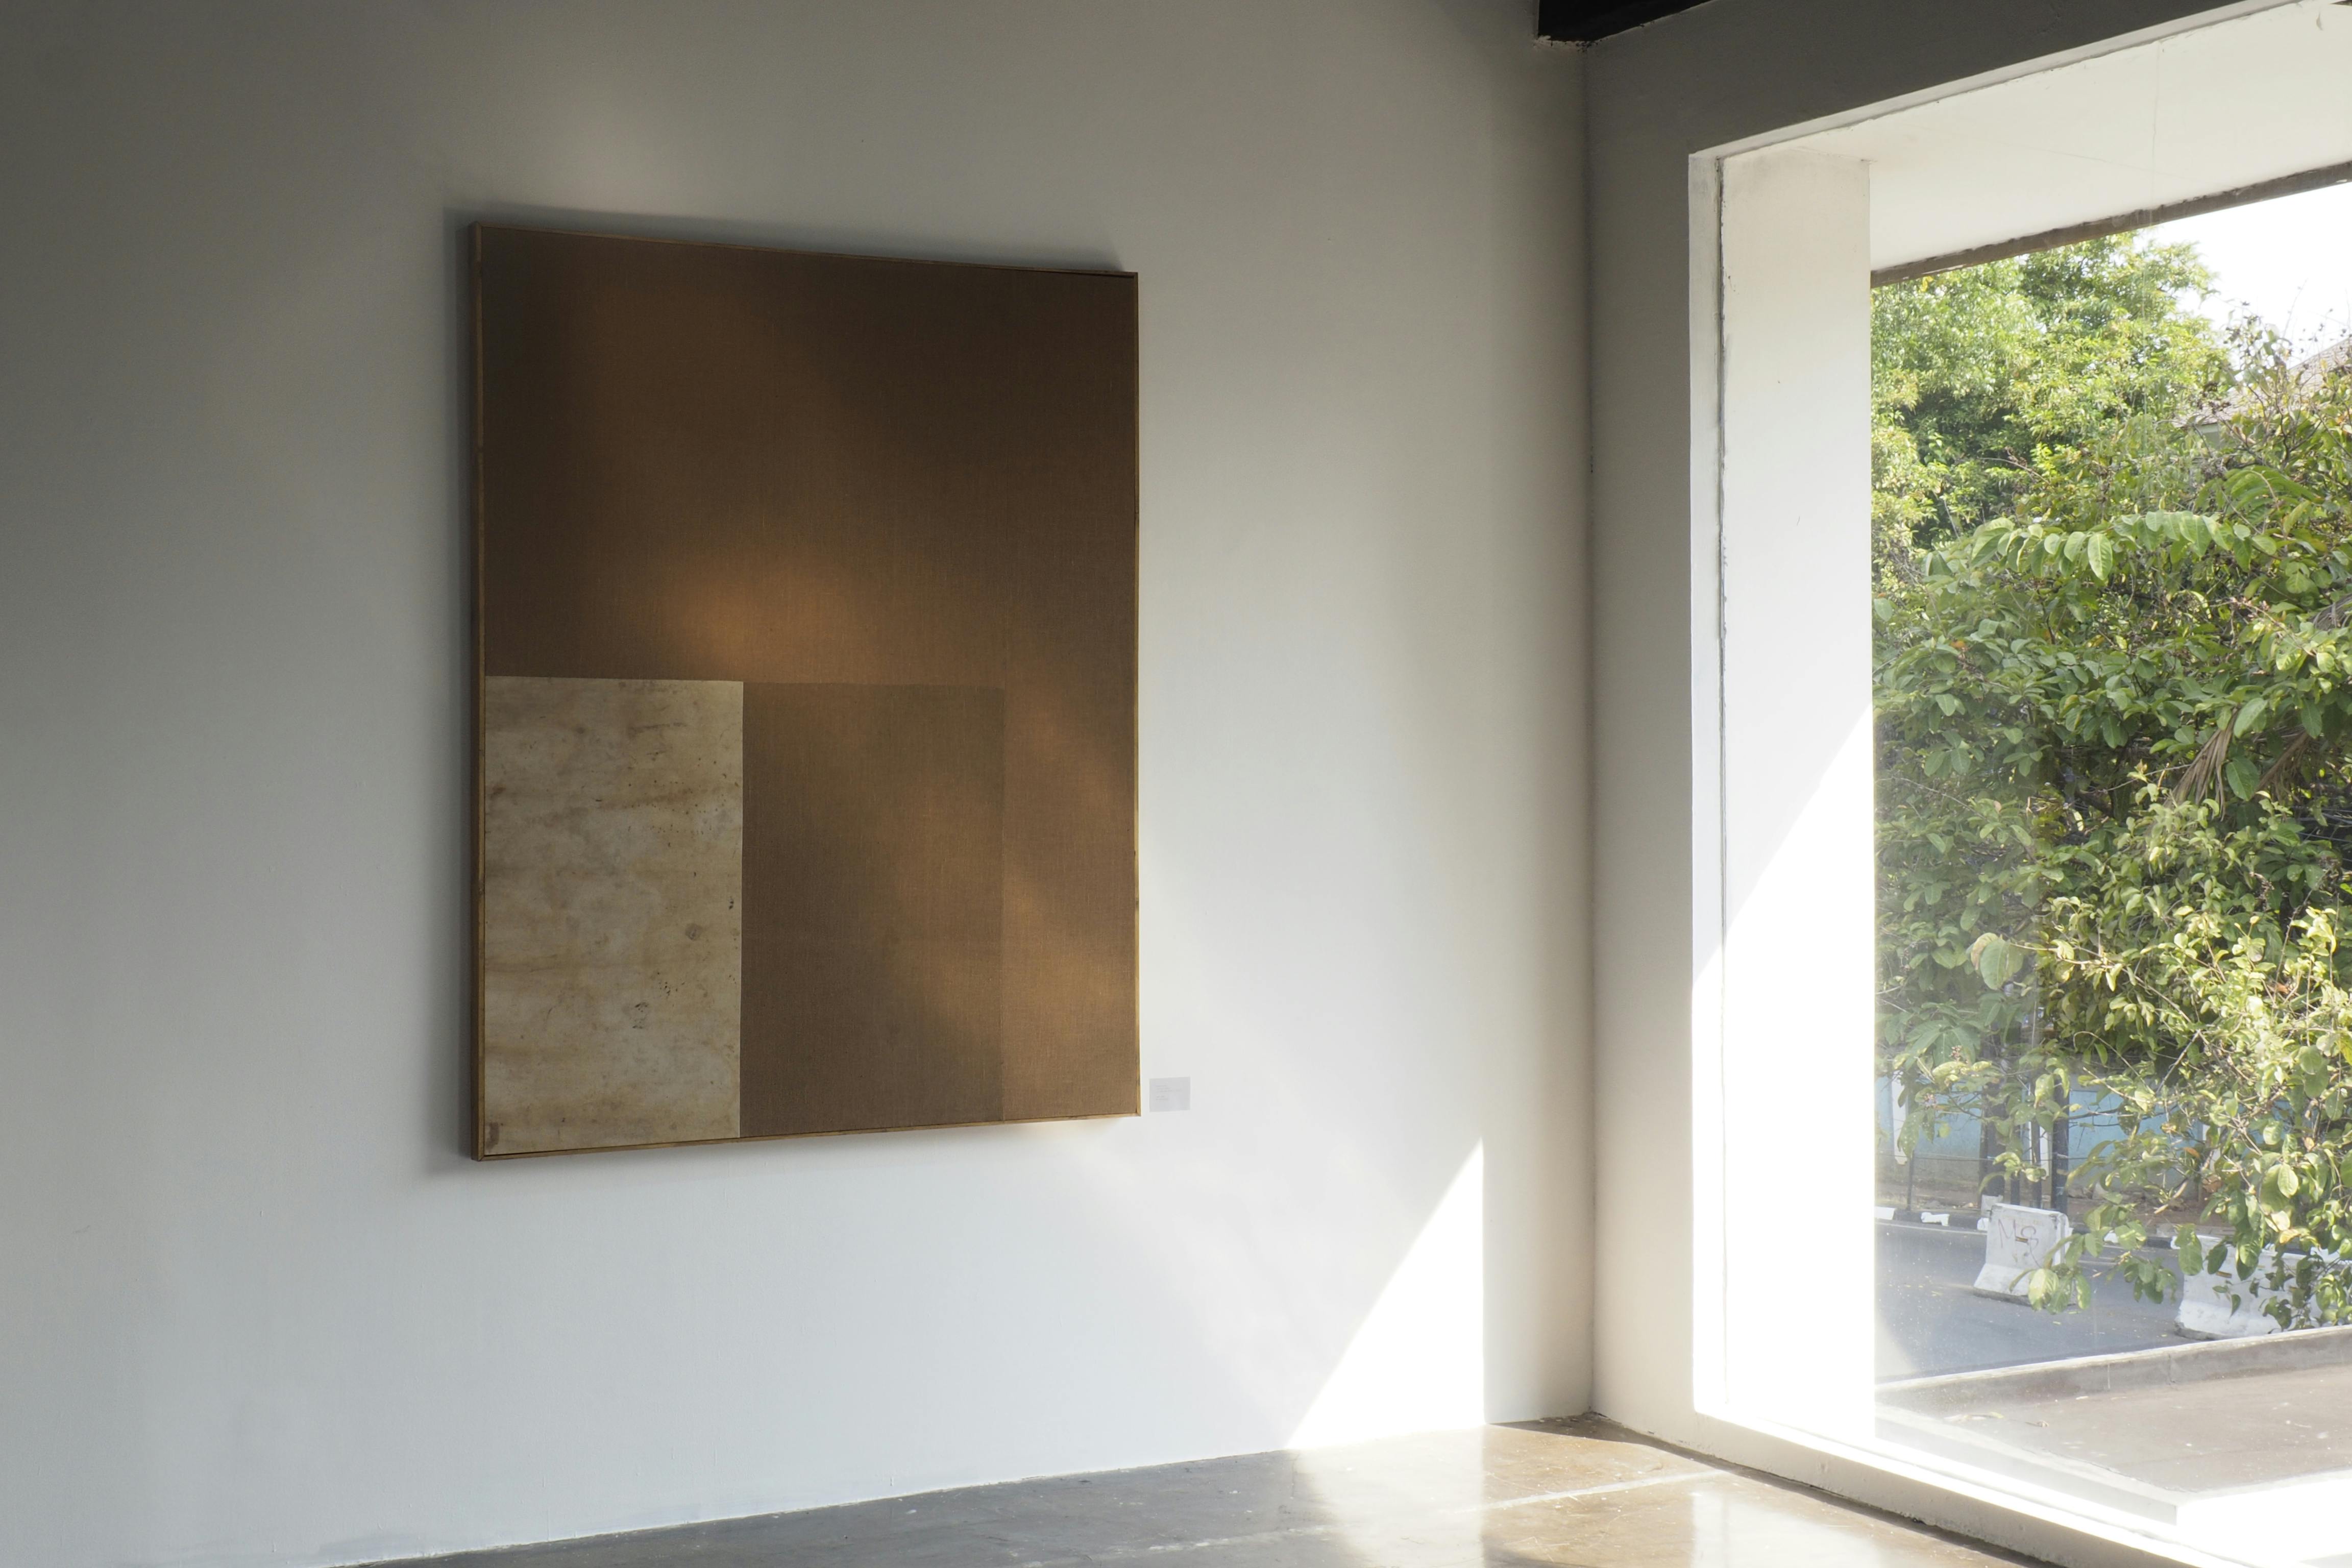 abstract earthtone woven artwork on display on a wall beside a window